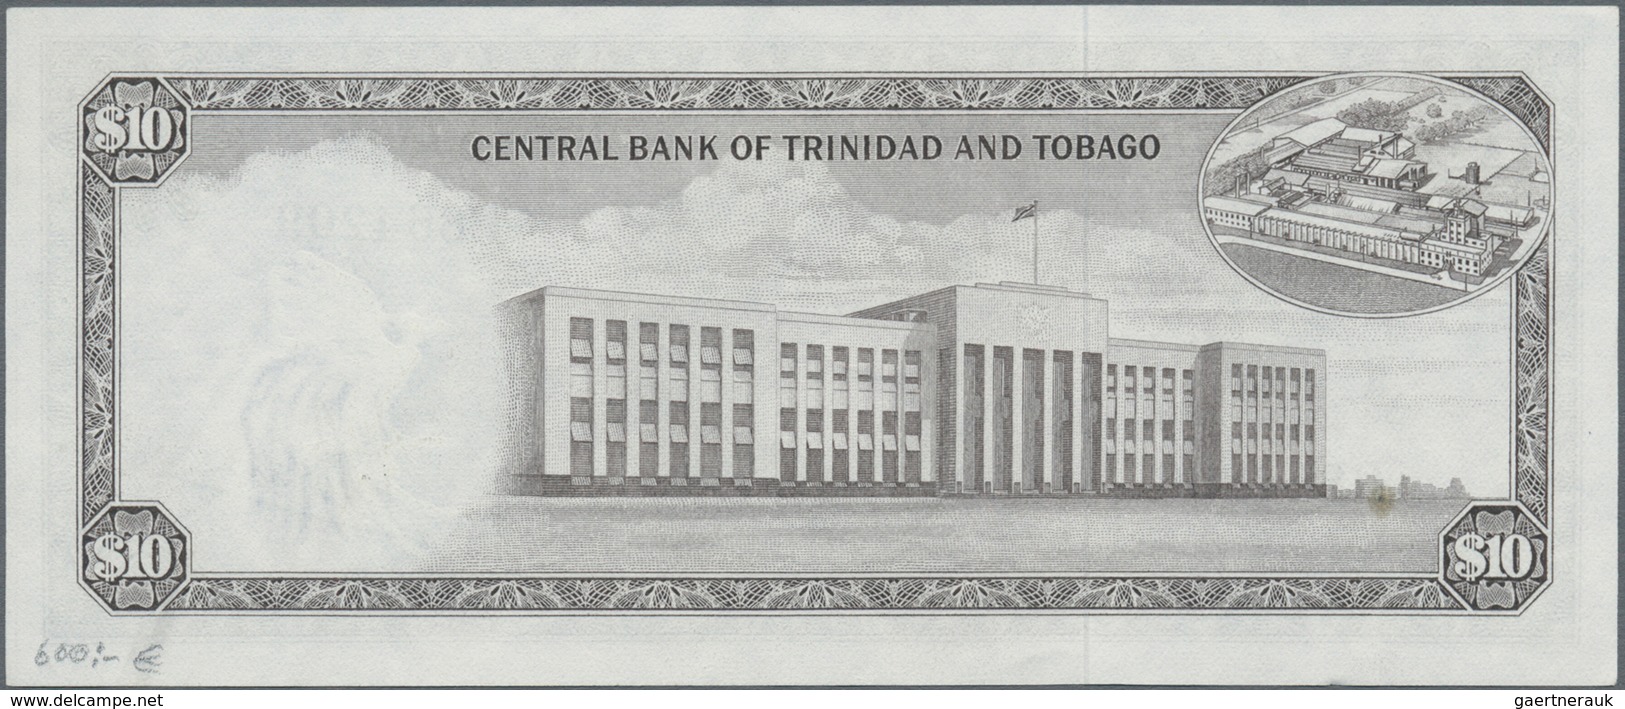 Trinidad & Tobago: Lot with 5 banknotes 1 and 2 Dollars 1943 P.5, 8 (F-, F), 10 and 20 Dollars L.196